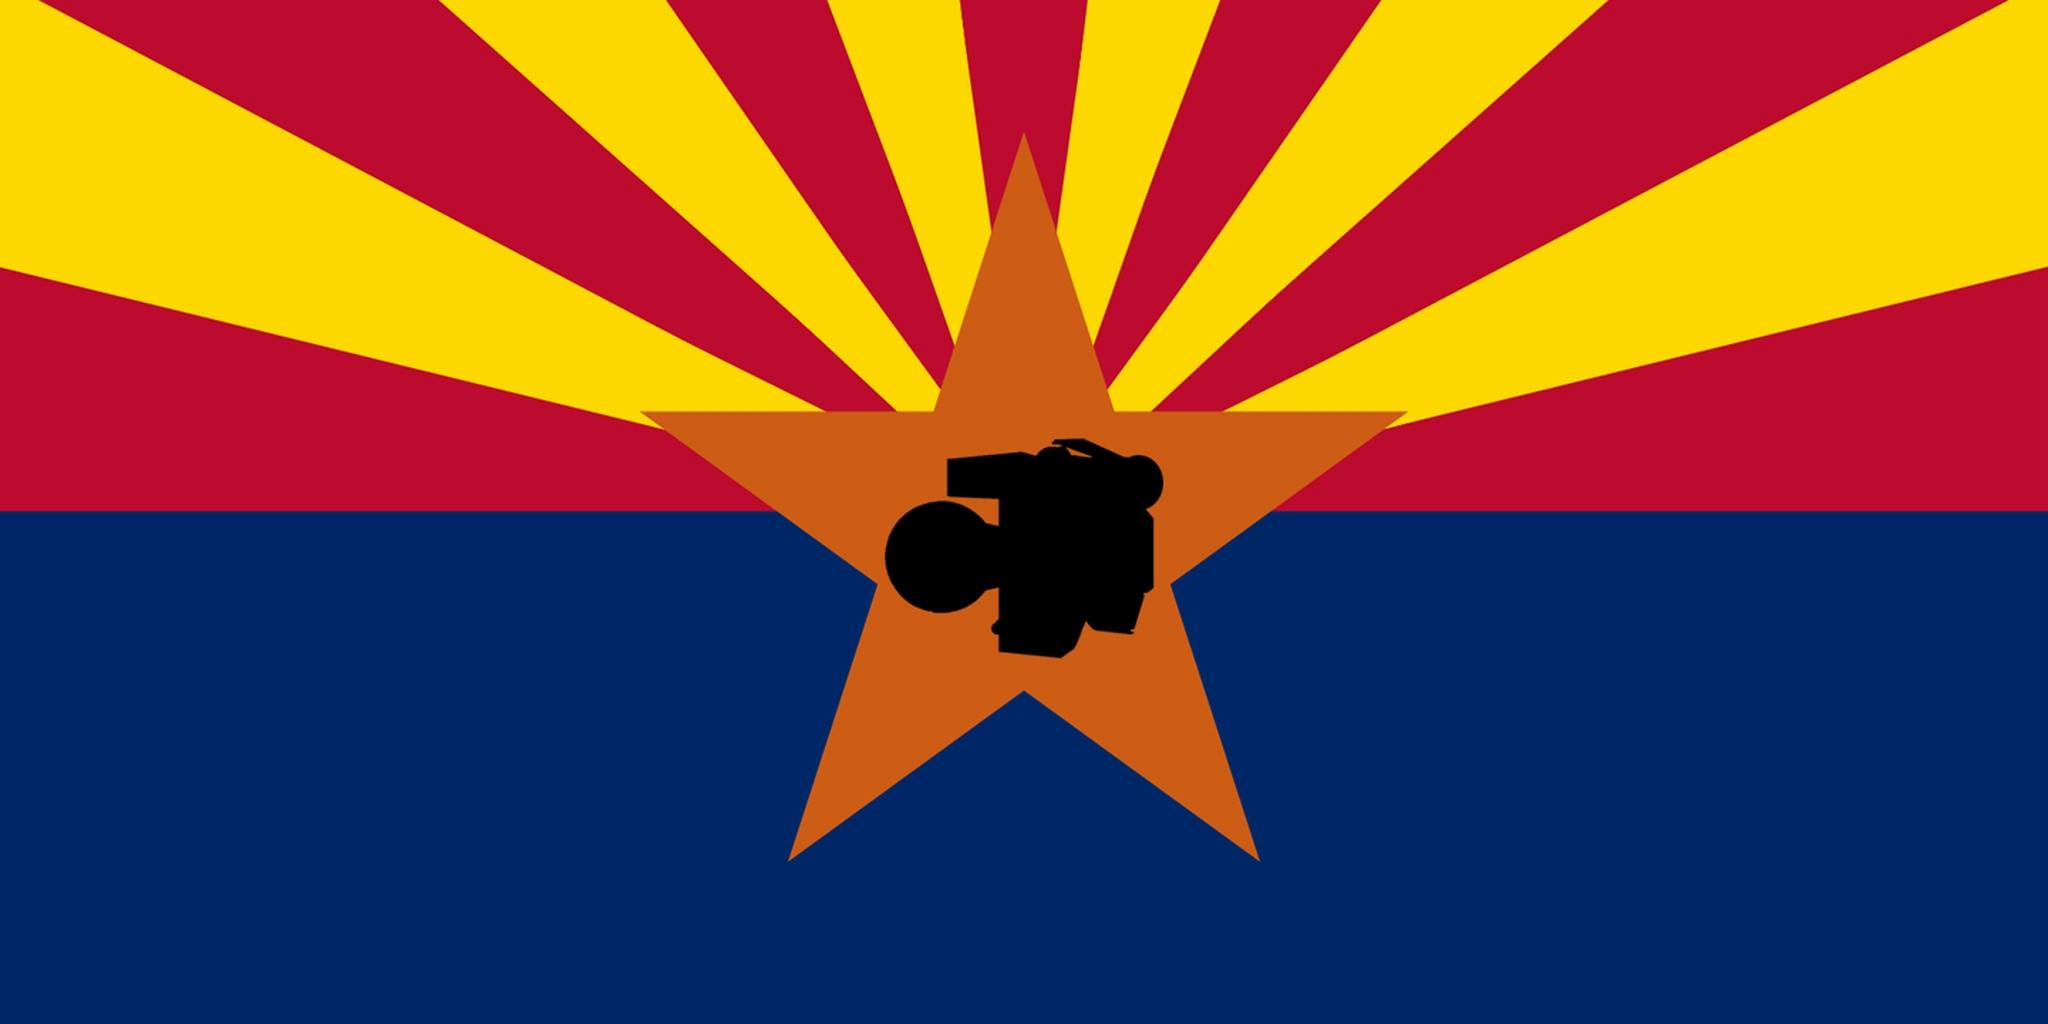 Arizona passes the harshest revenge porn law in the U.S.